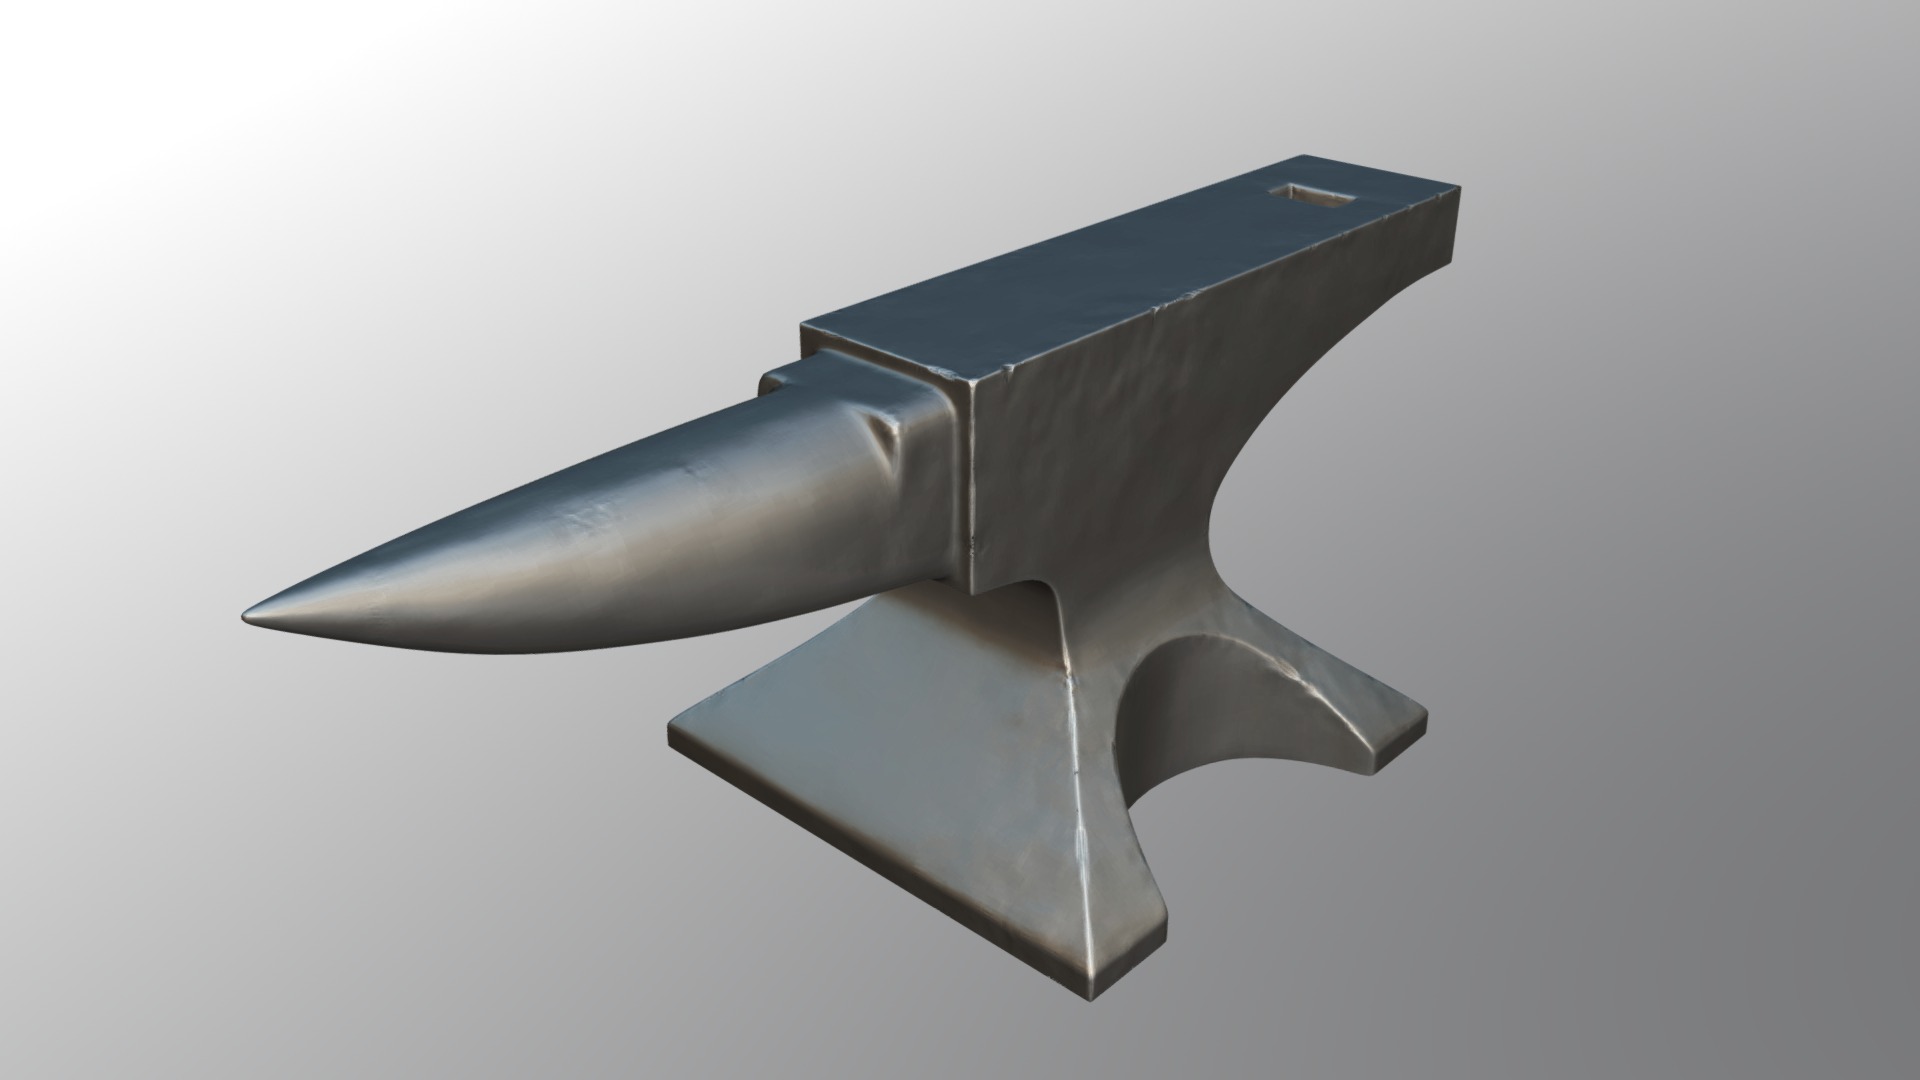 3D model Anvil – Farrier -Smithy – Plover 3D model - This is a 3D model of the Anvil - Farrier -Smithy - Plover 3D model. The 3D model is about a black knife with a handle.